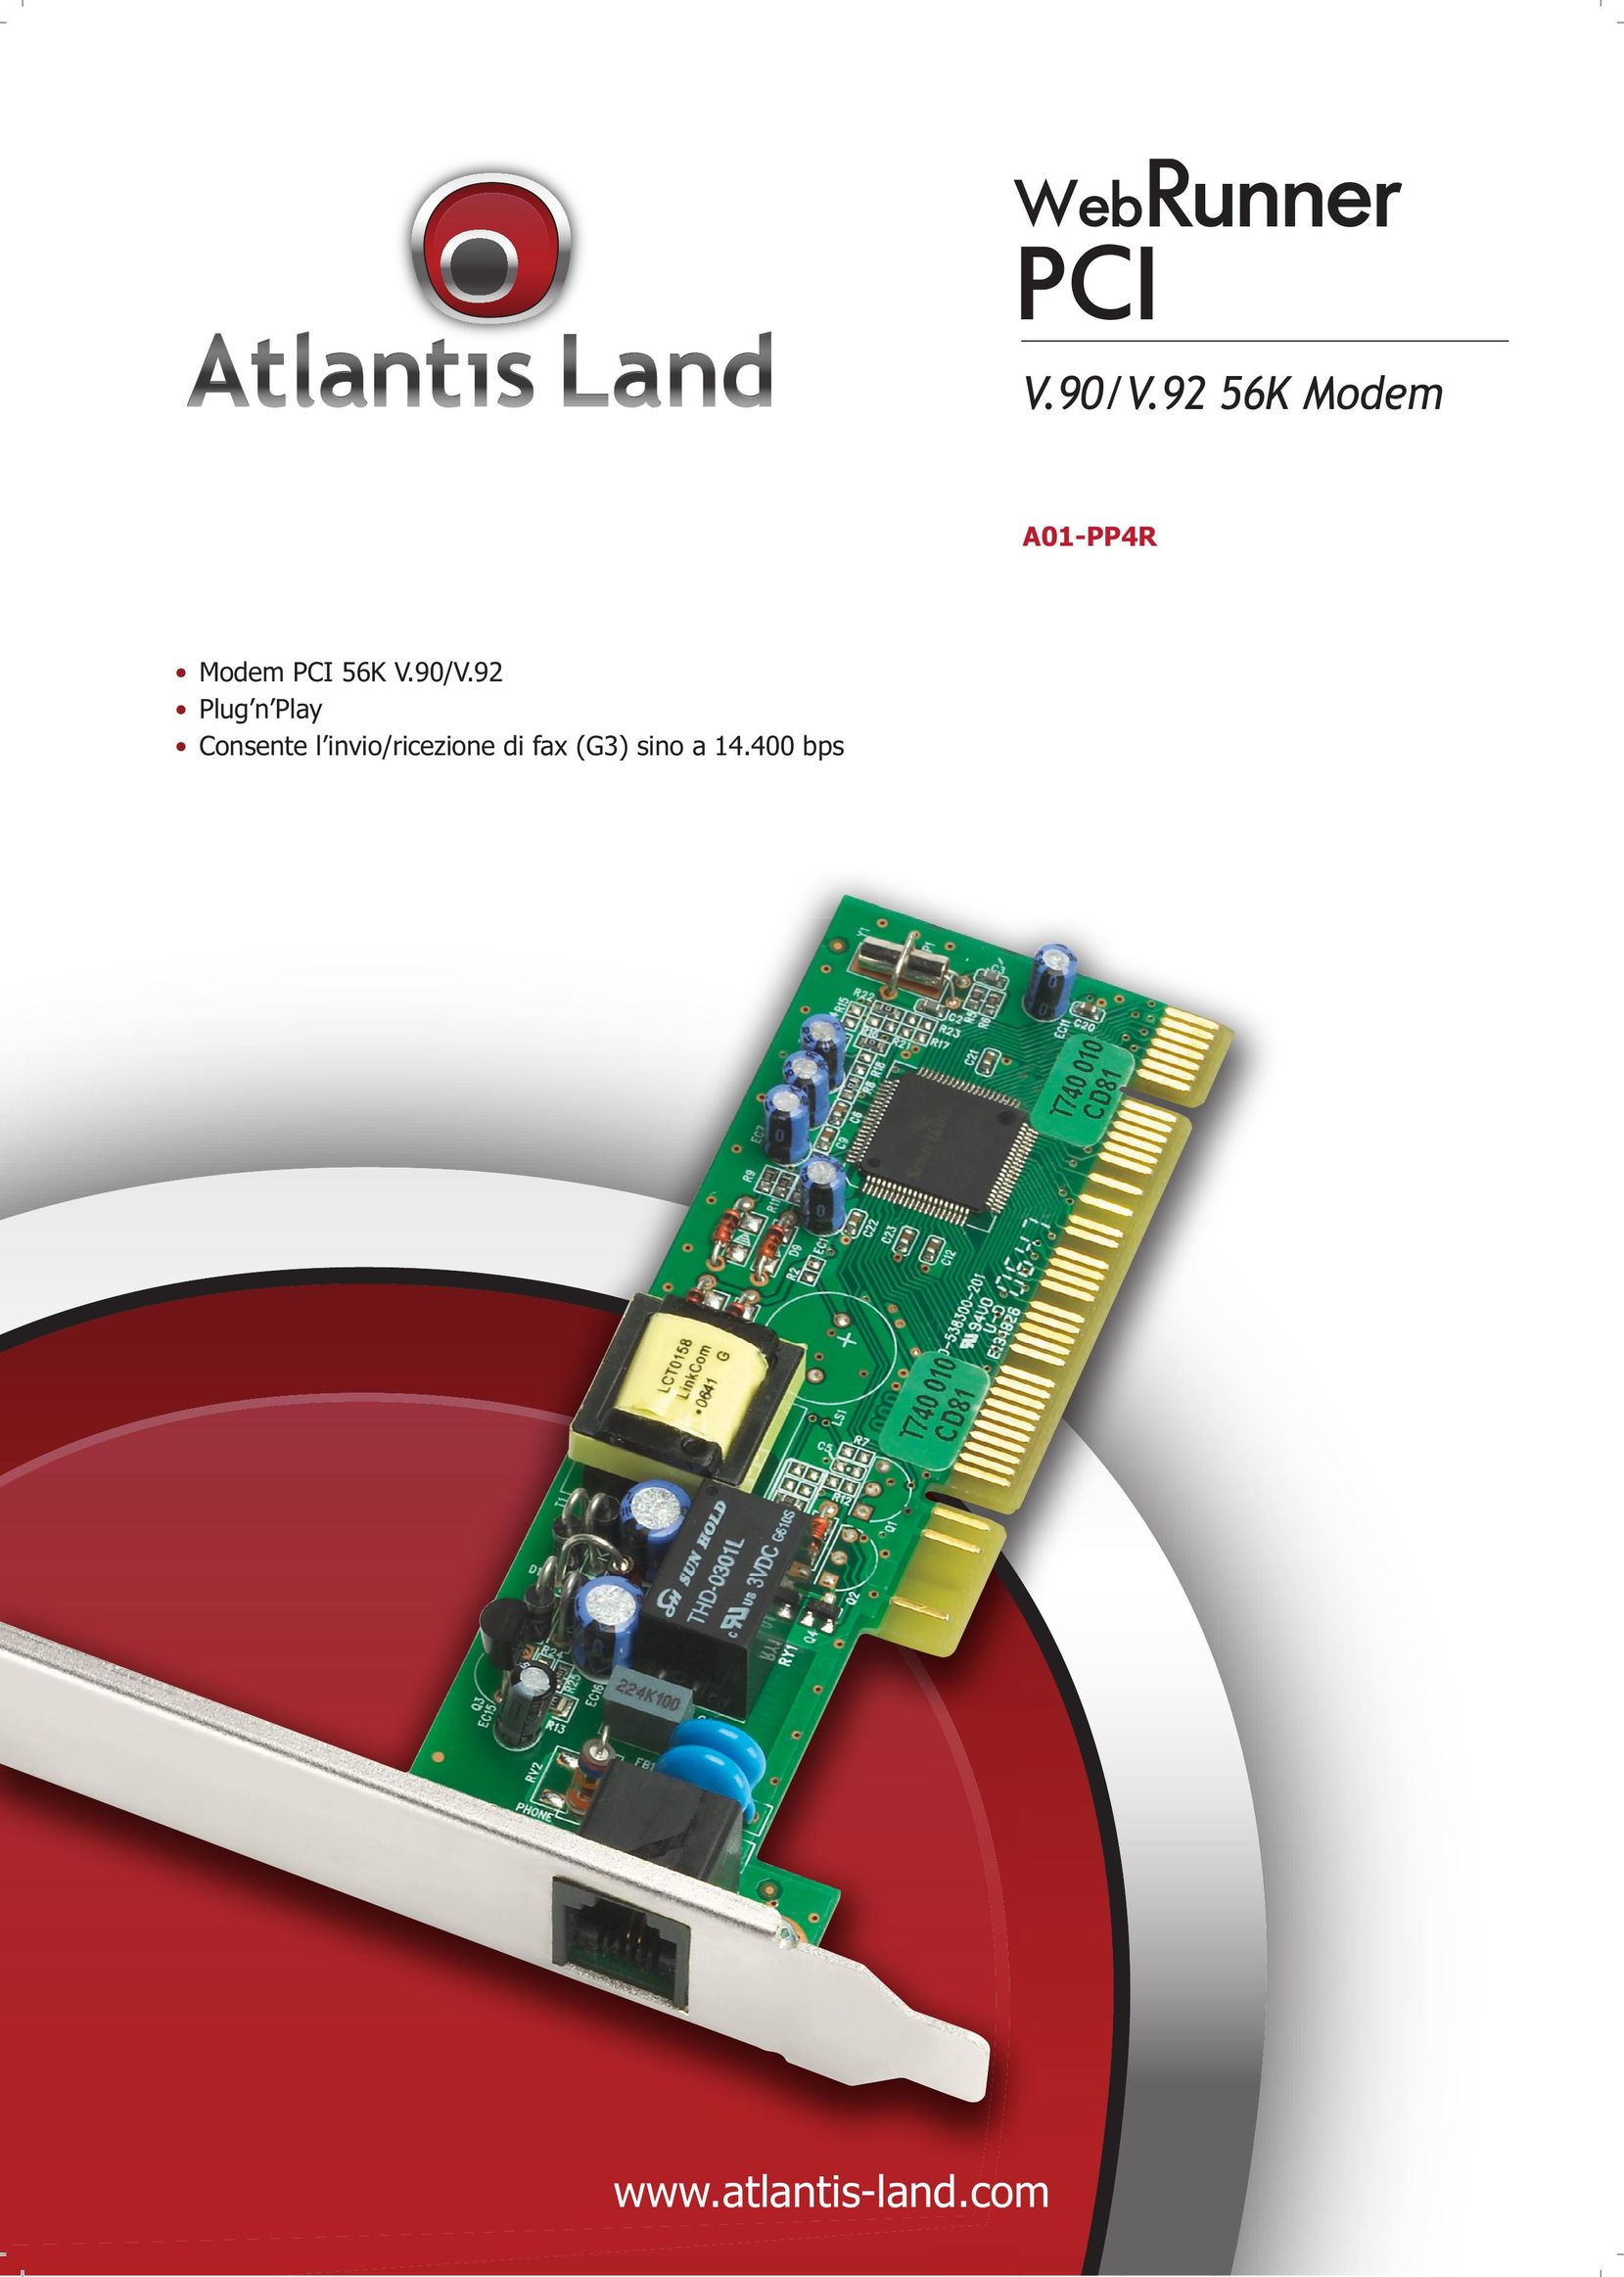 Atlantis Land A01-PP4R Network Router User Manual